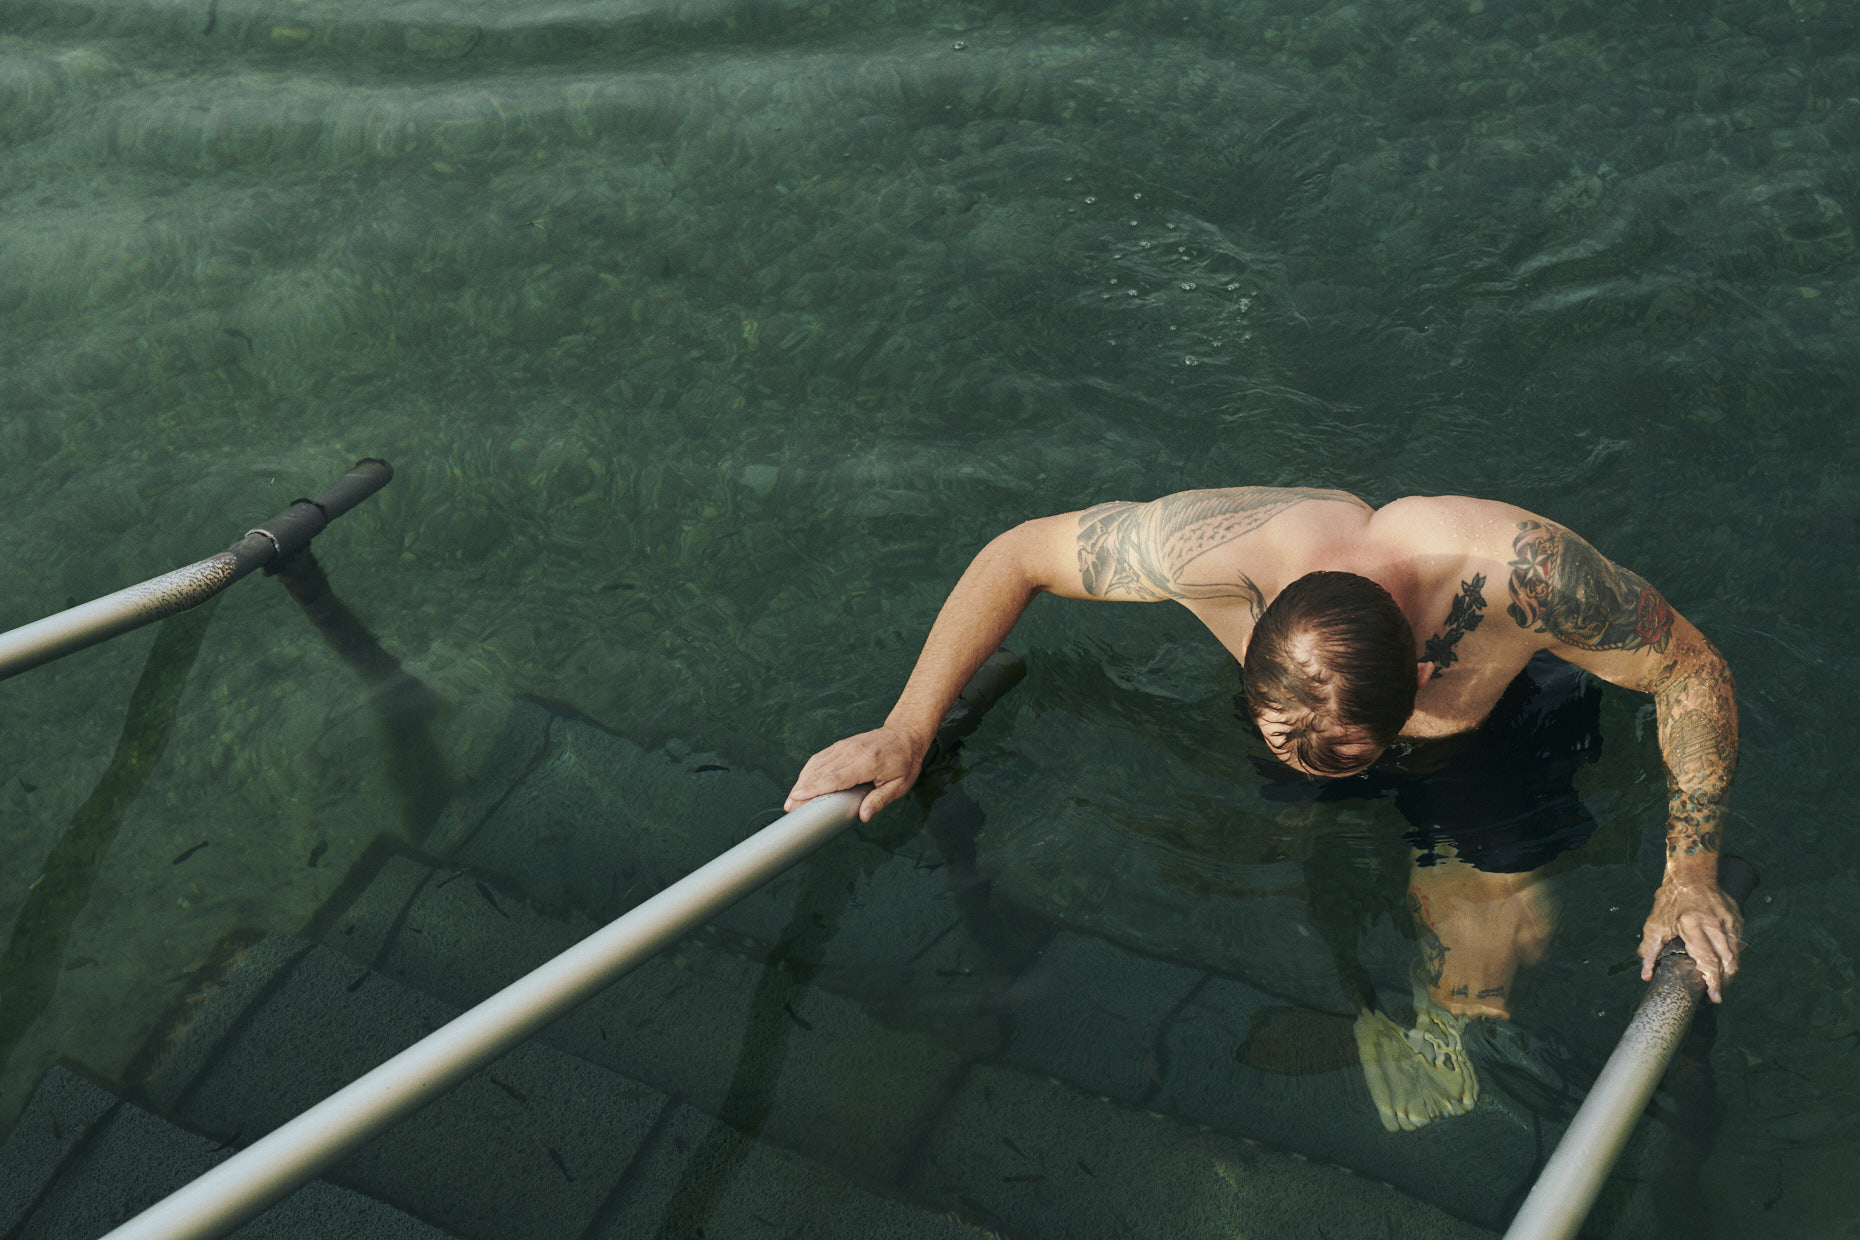 European Swimming Pool  || Brian Stevens  || Photography